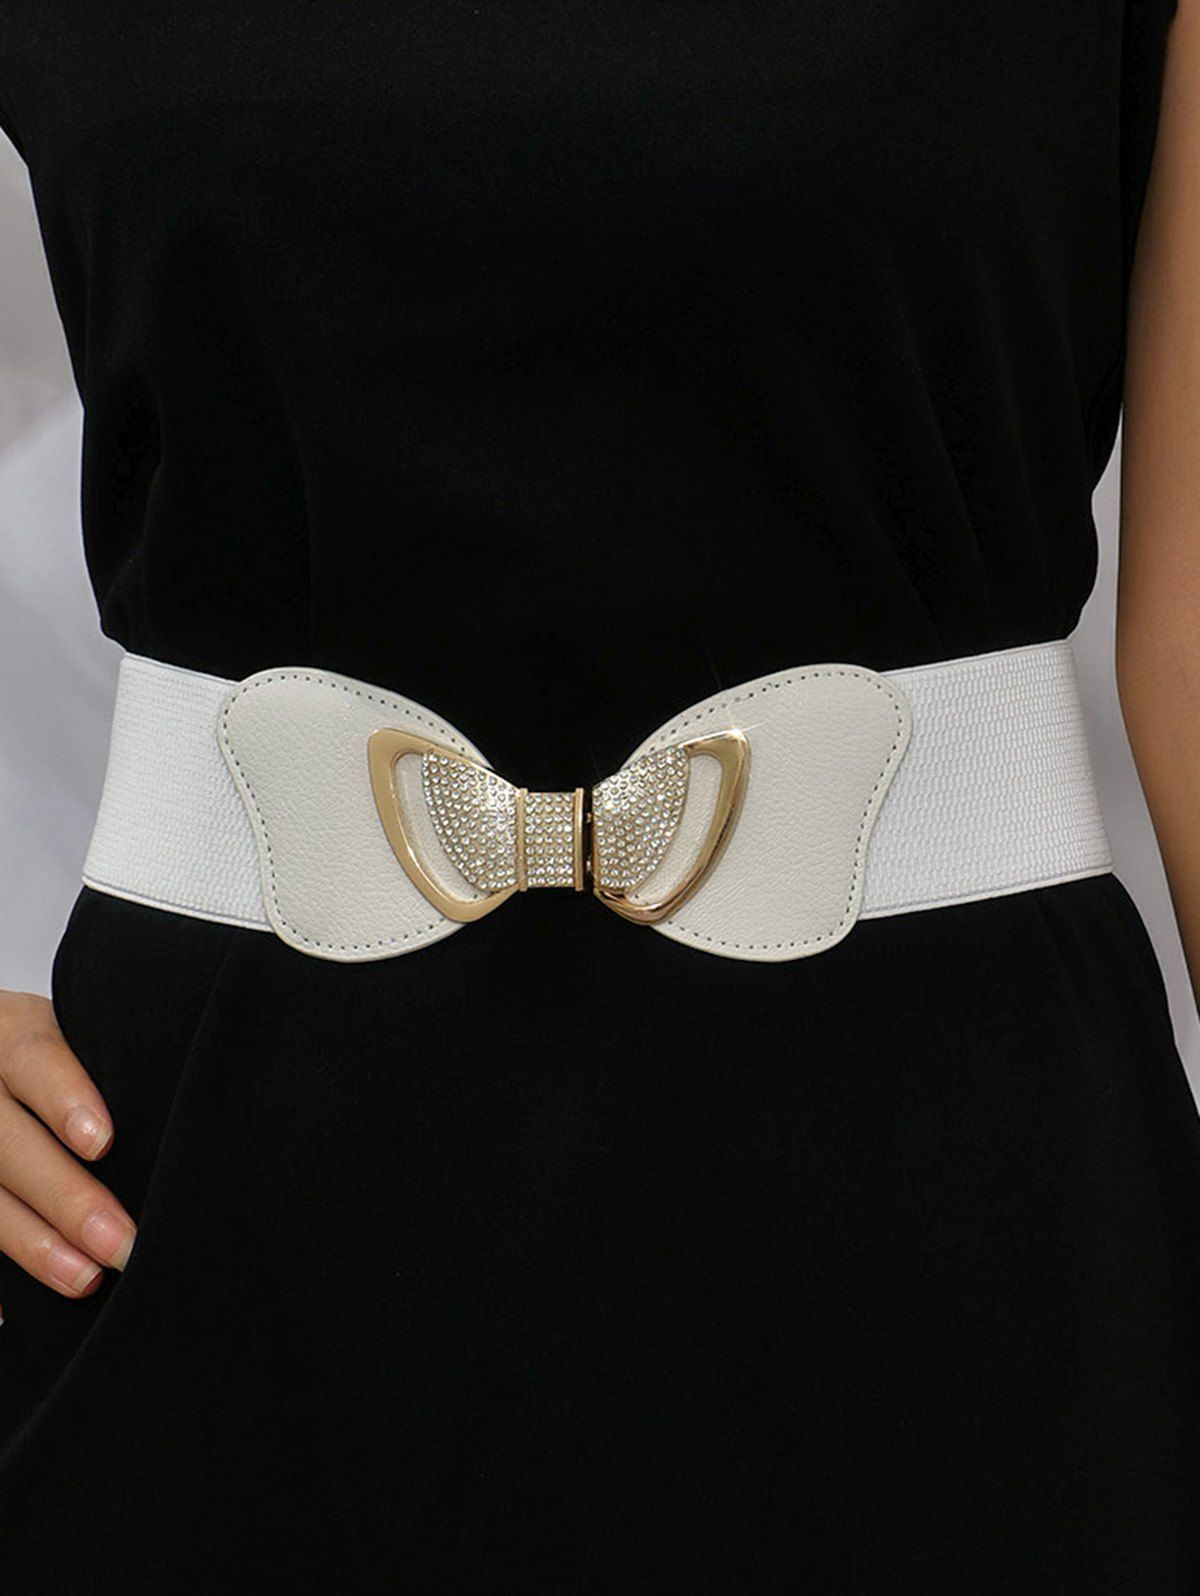 Sparkly Rhinestone Butterfly Buckle Elastic Waist Belt Shirt Dress Decoration - WHITE 